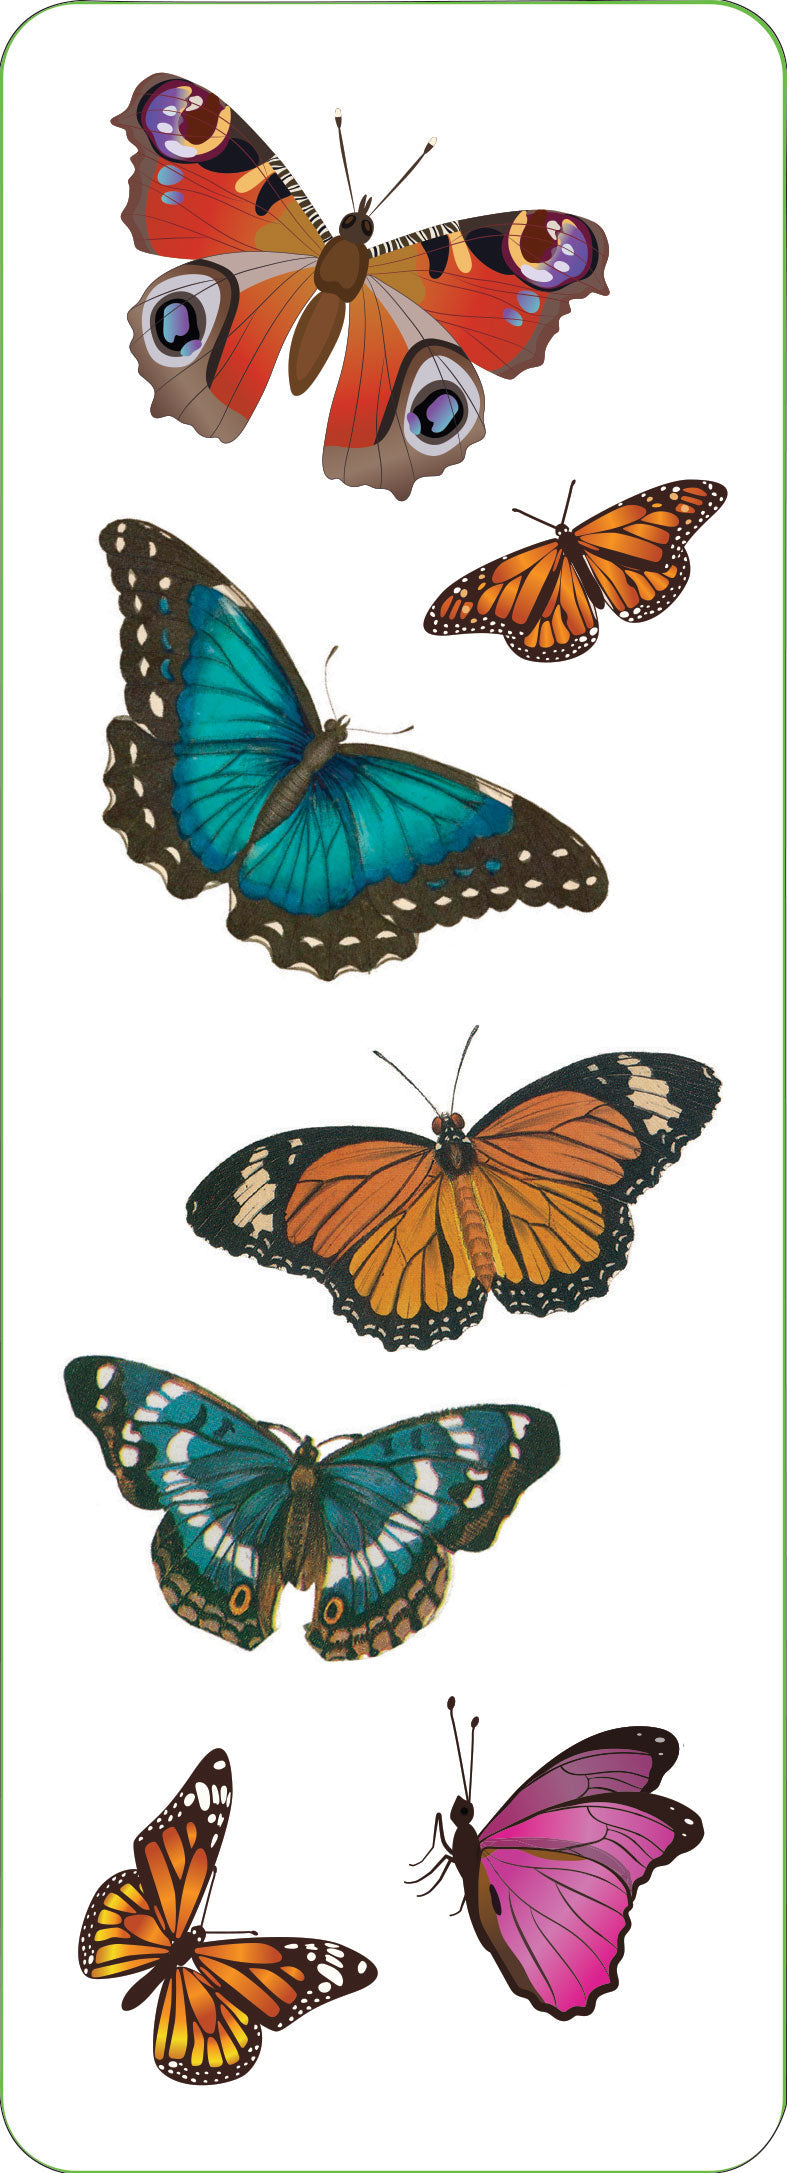 Park Lane Adhesive Gem Sticker Butterfly